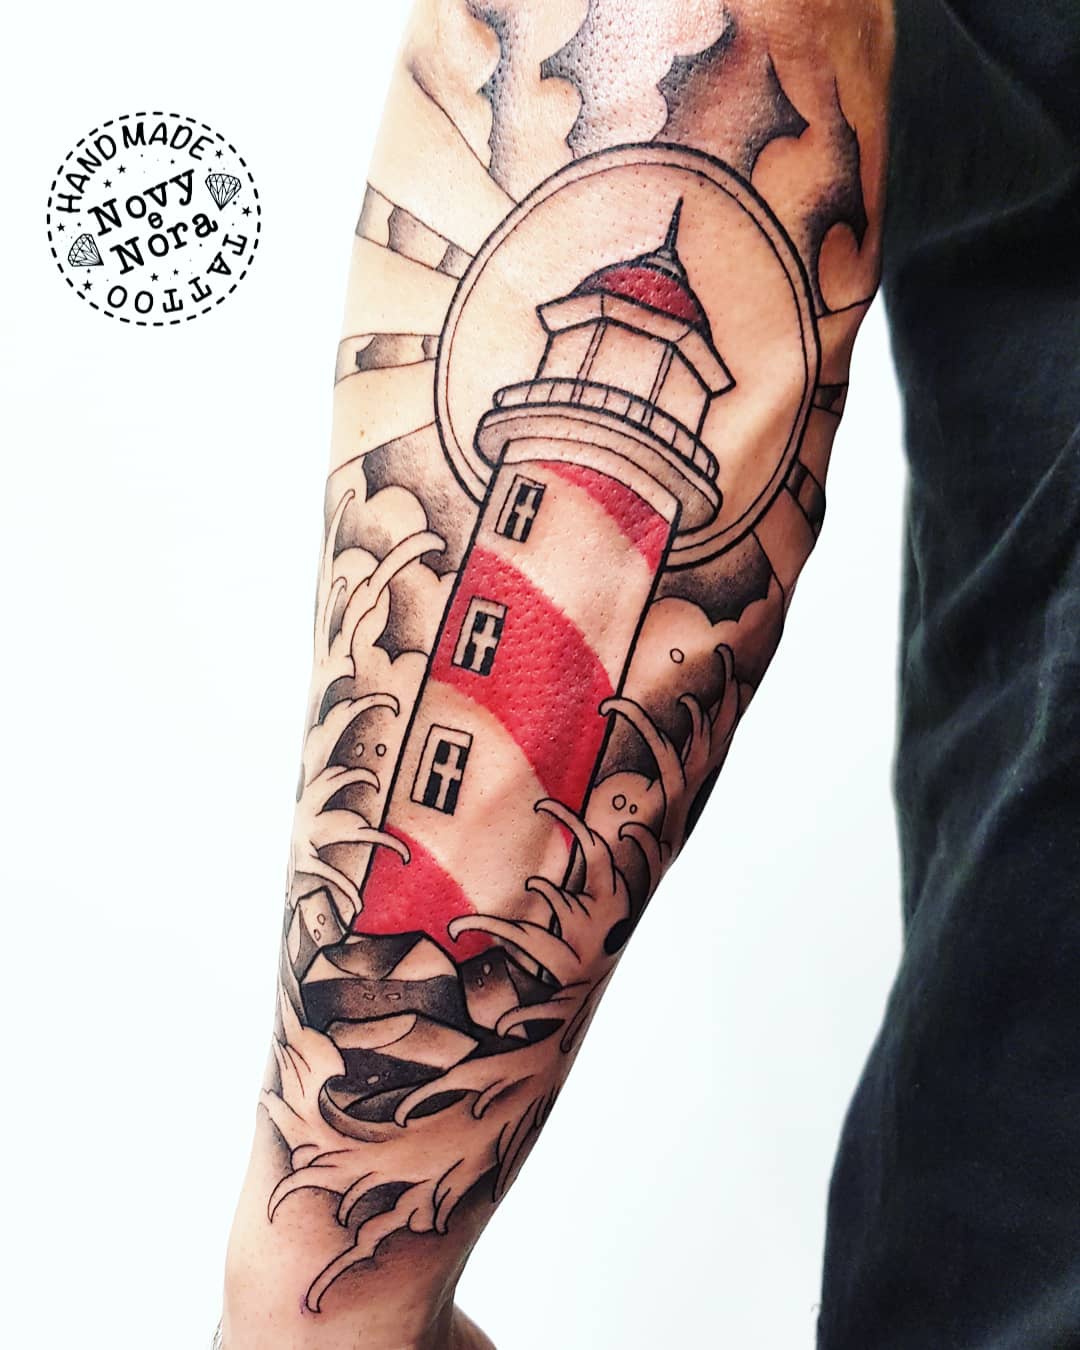 Northside Tattooz on Twitter Lighthouse tattoo by Adam Smith  Northsidetattooz WhitleyBay lighthousetattoo swallow lighthouse  dotworktattoo httpstcolEgJaRgjga  Twitter